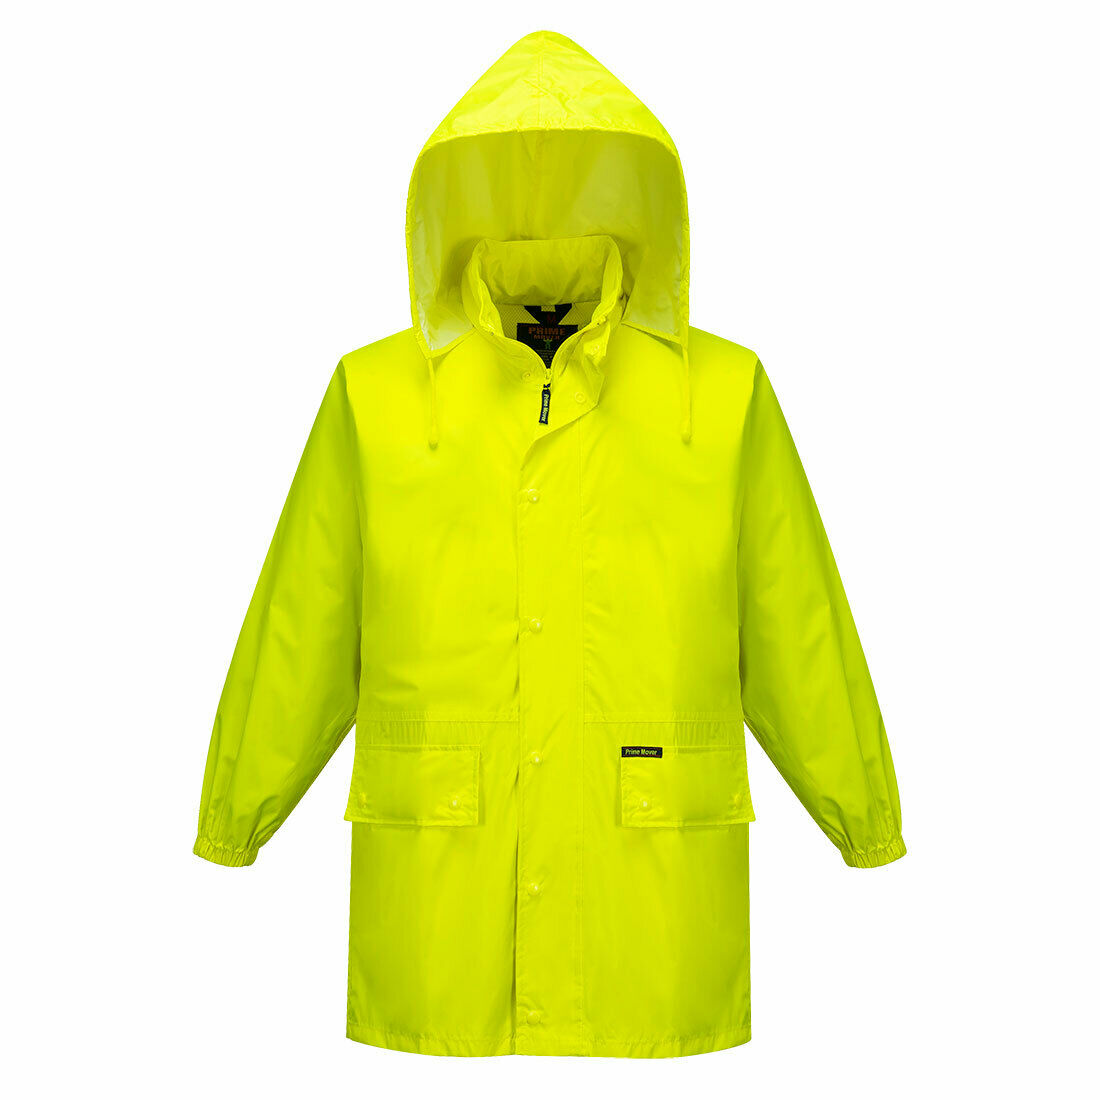 Portwest Mens Wet Weather Hi-Vis Polyester Waterproof Work Jacket Suit MS939